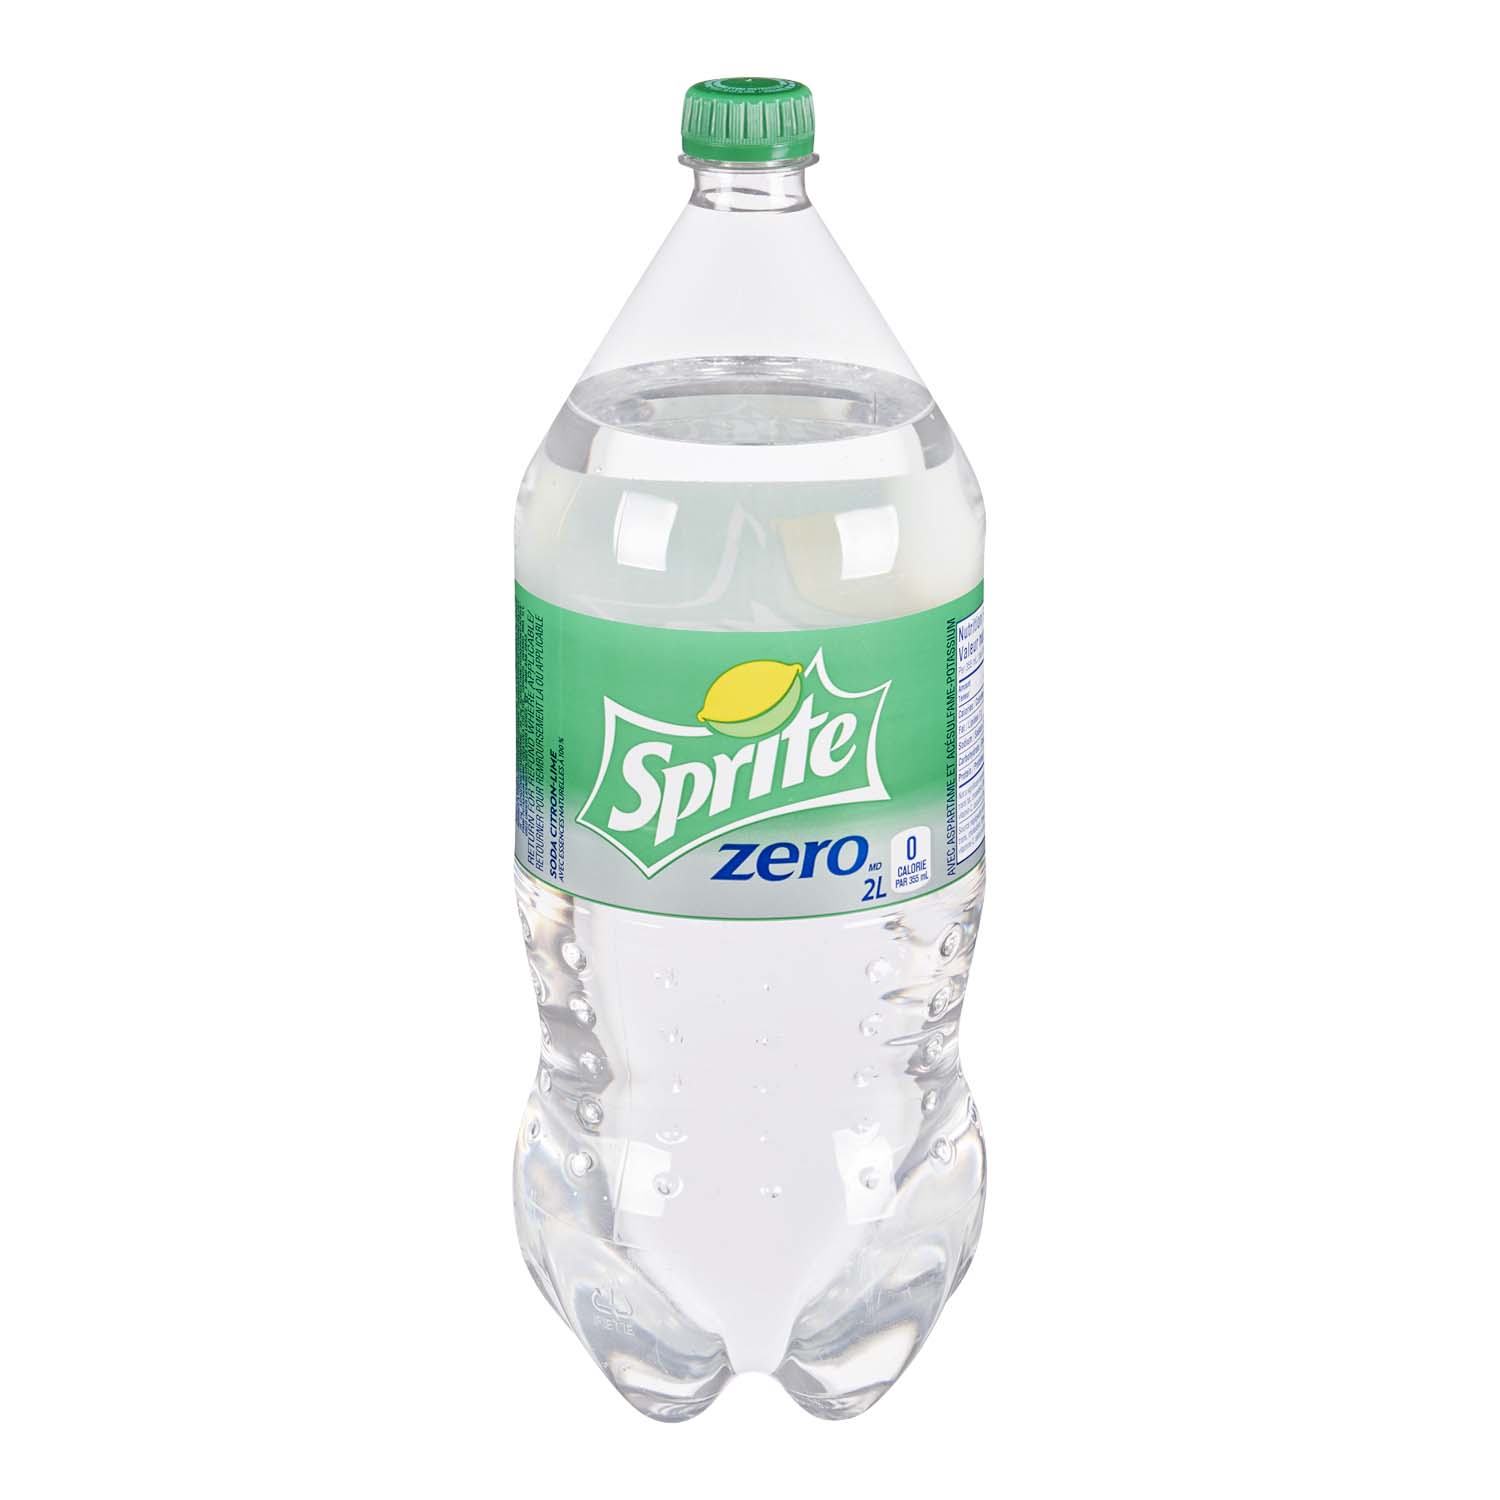 Sprite® Lemon Lime Zero Sugar Caffeine Free Soda Bottle, 2 liter